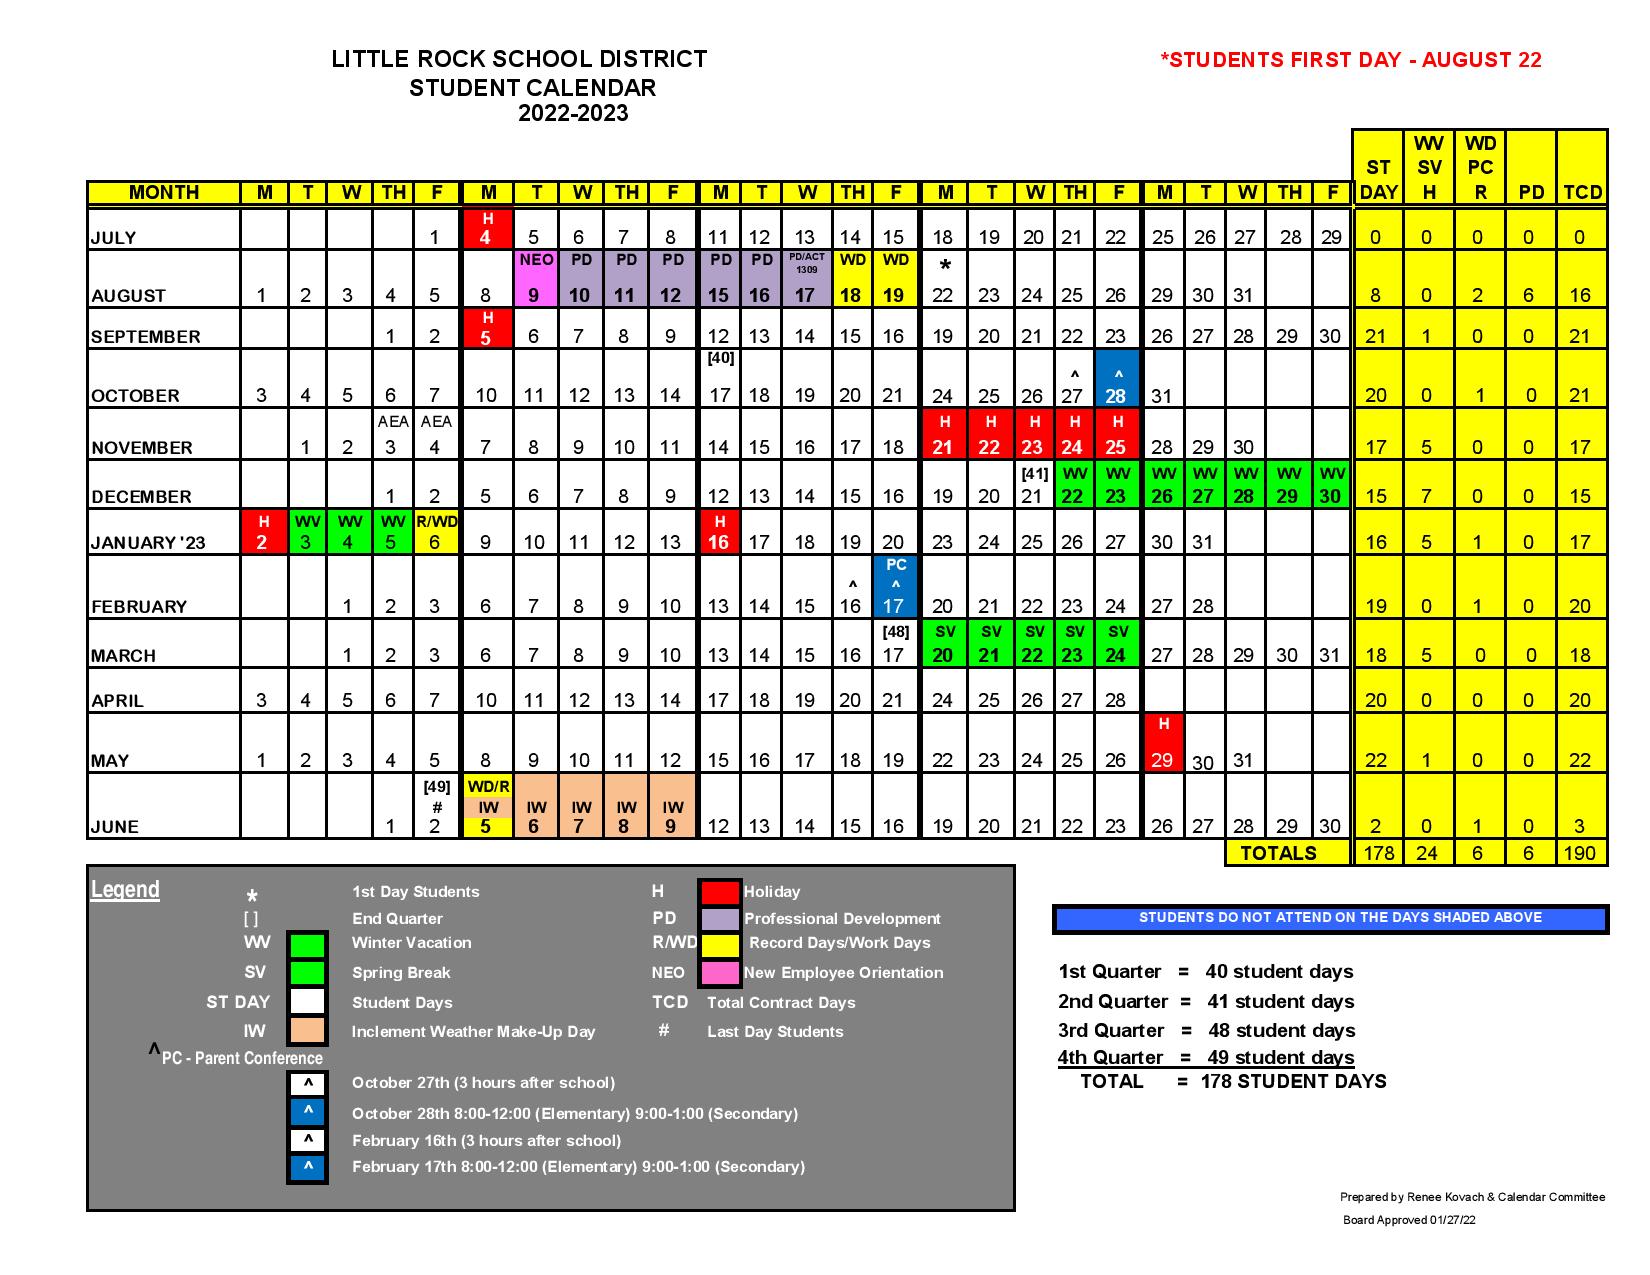 Little Rock School District Calendar Holidays 20222023 PDF School